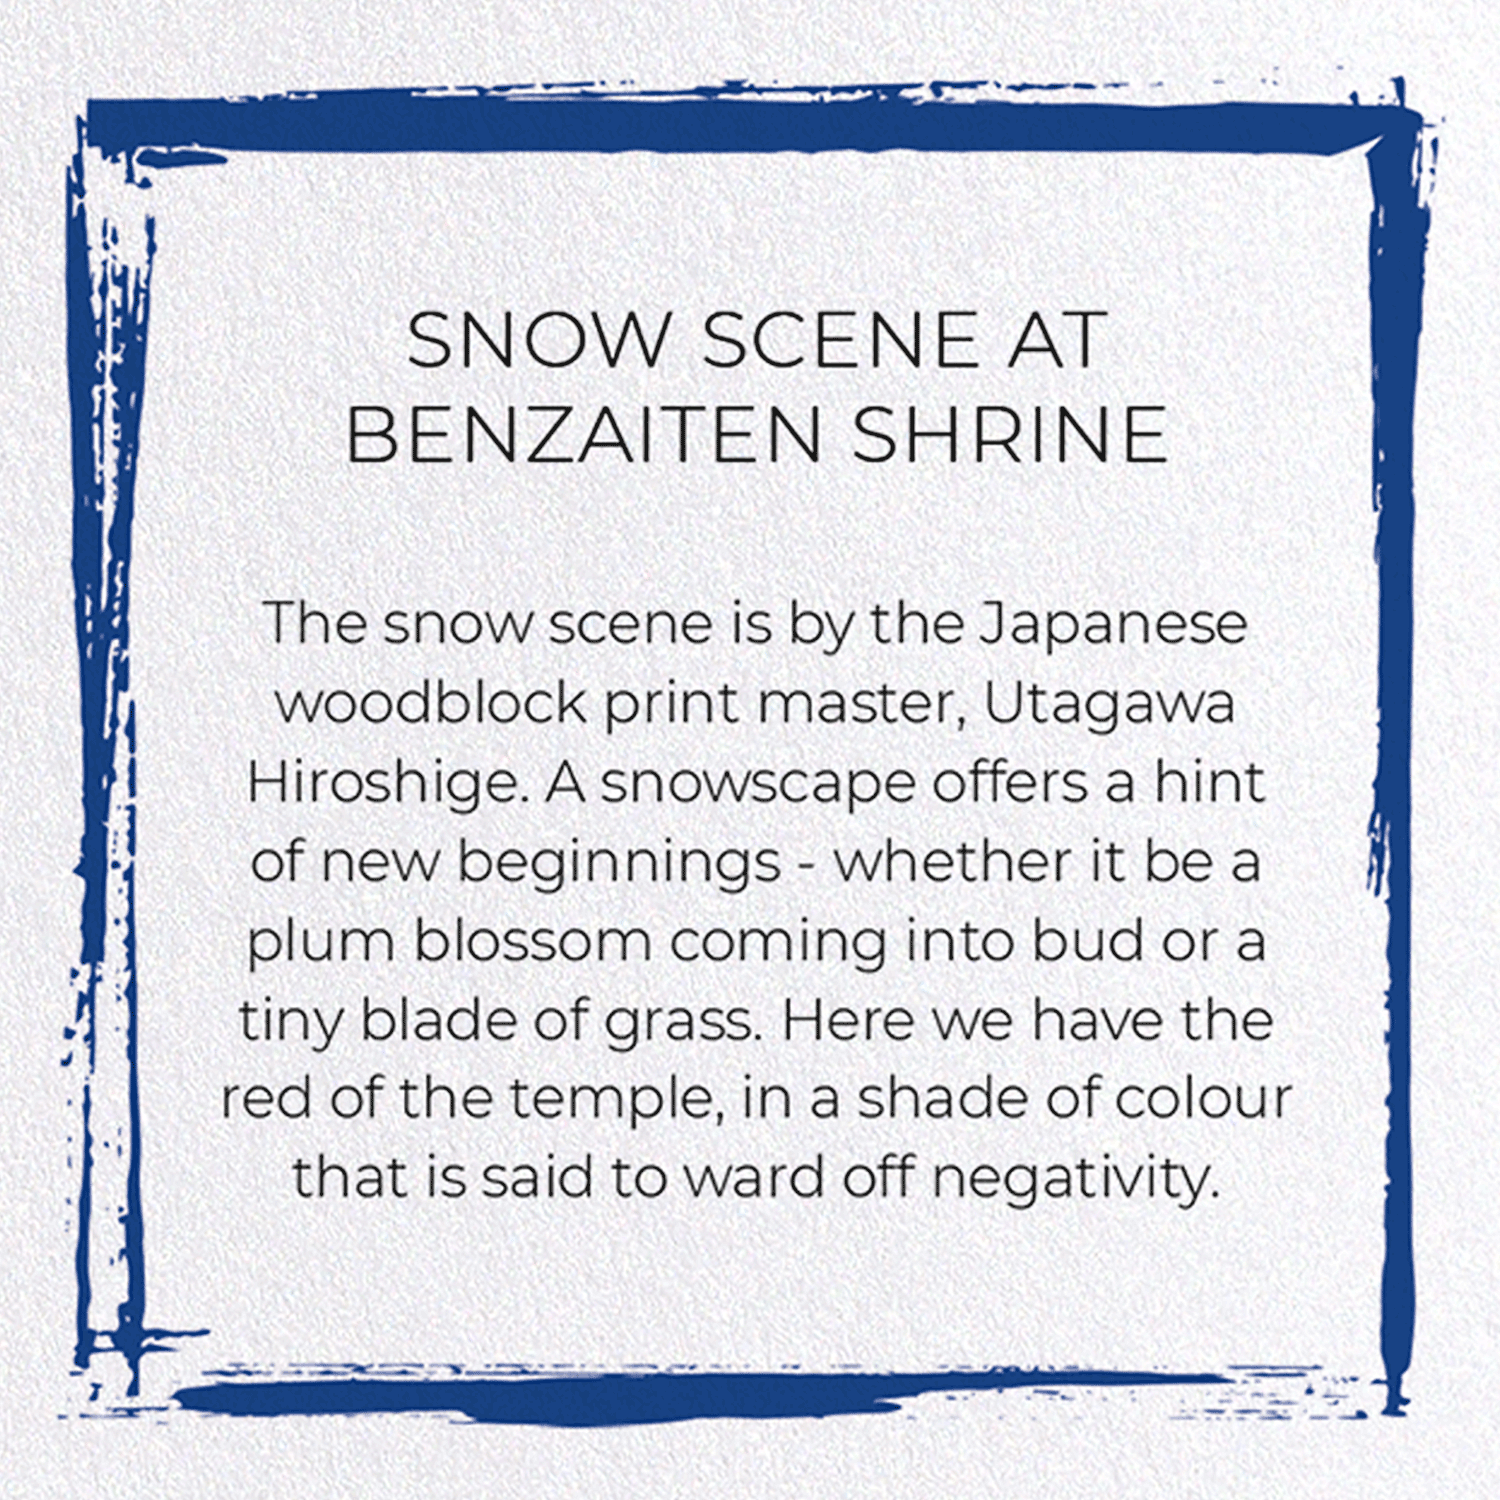 SNOW SCENE AT BENZAITEN SHRINE